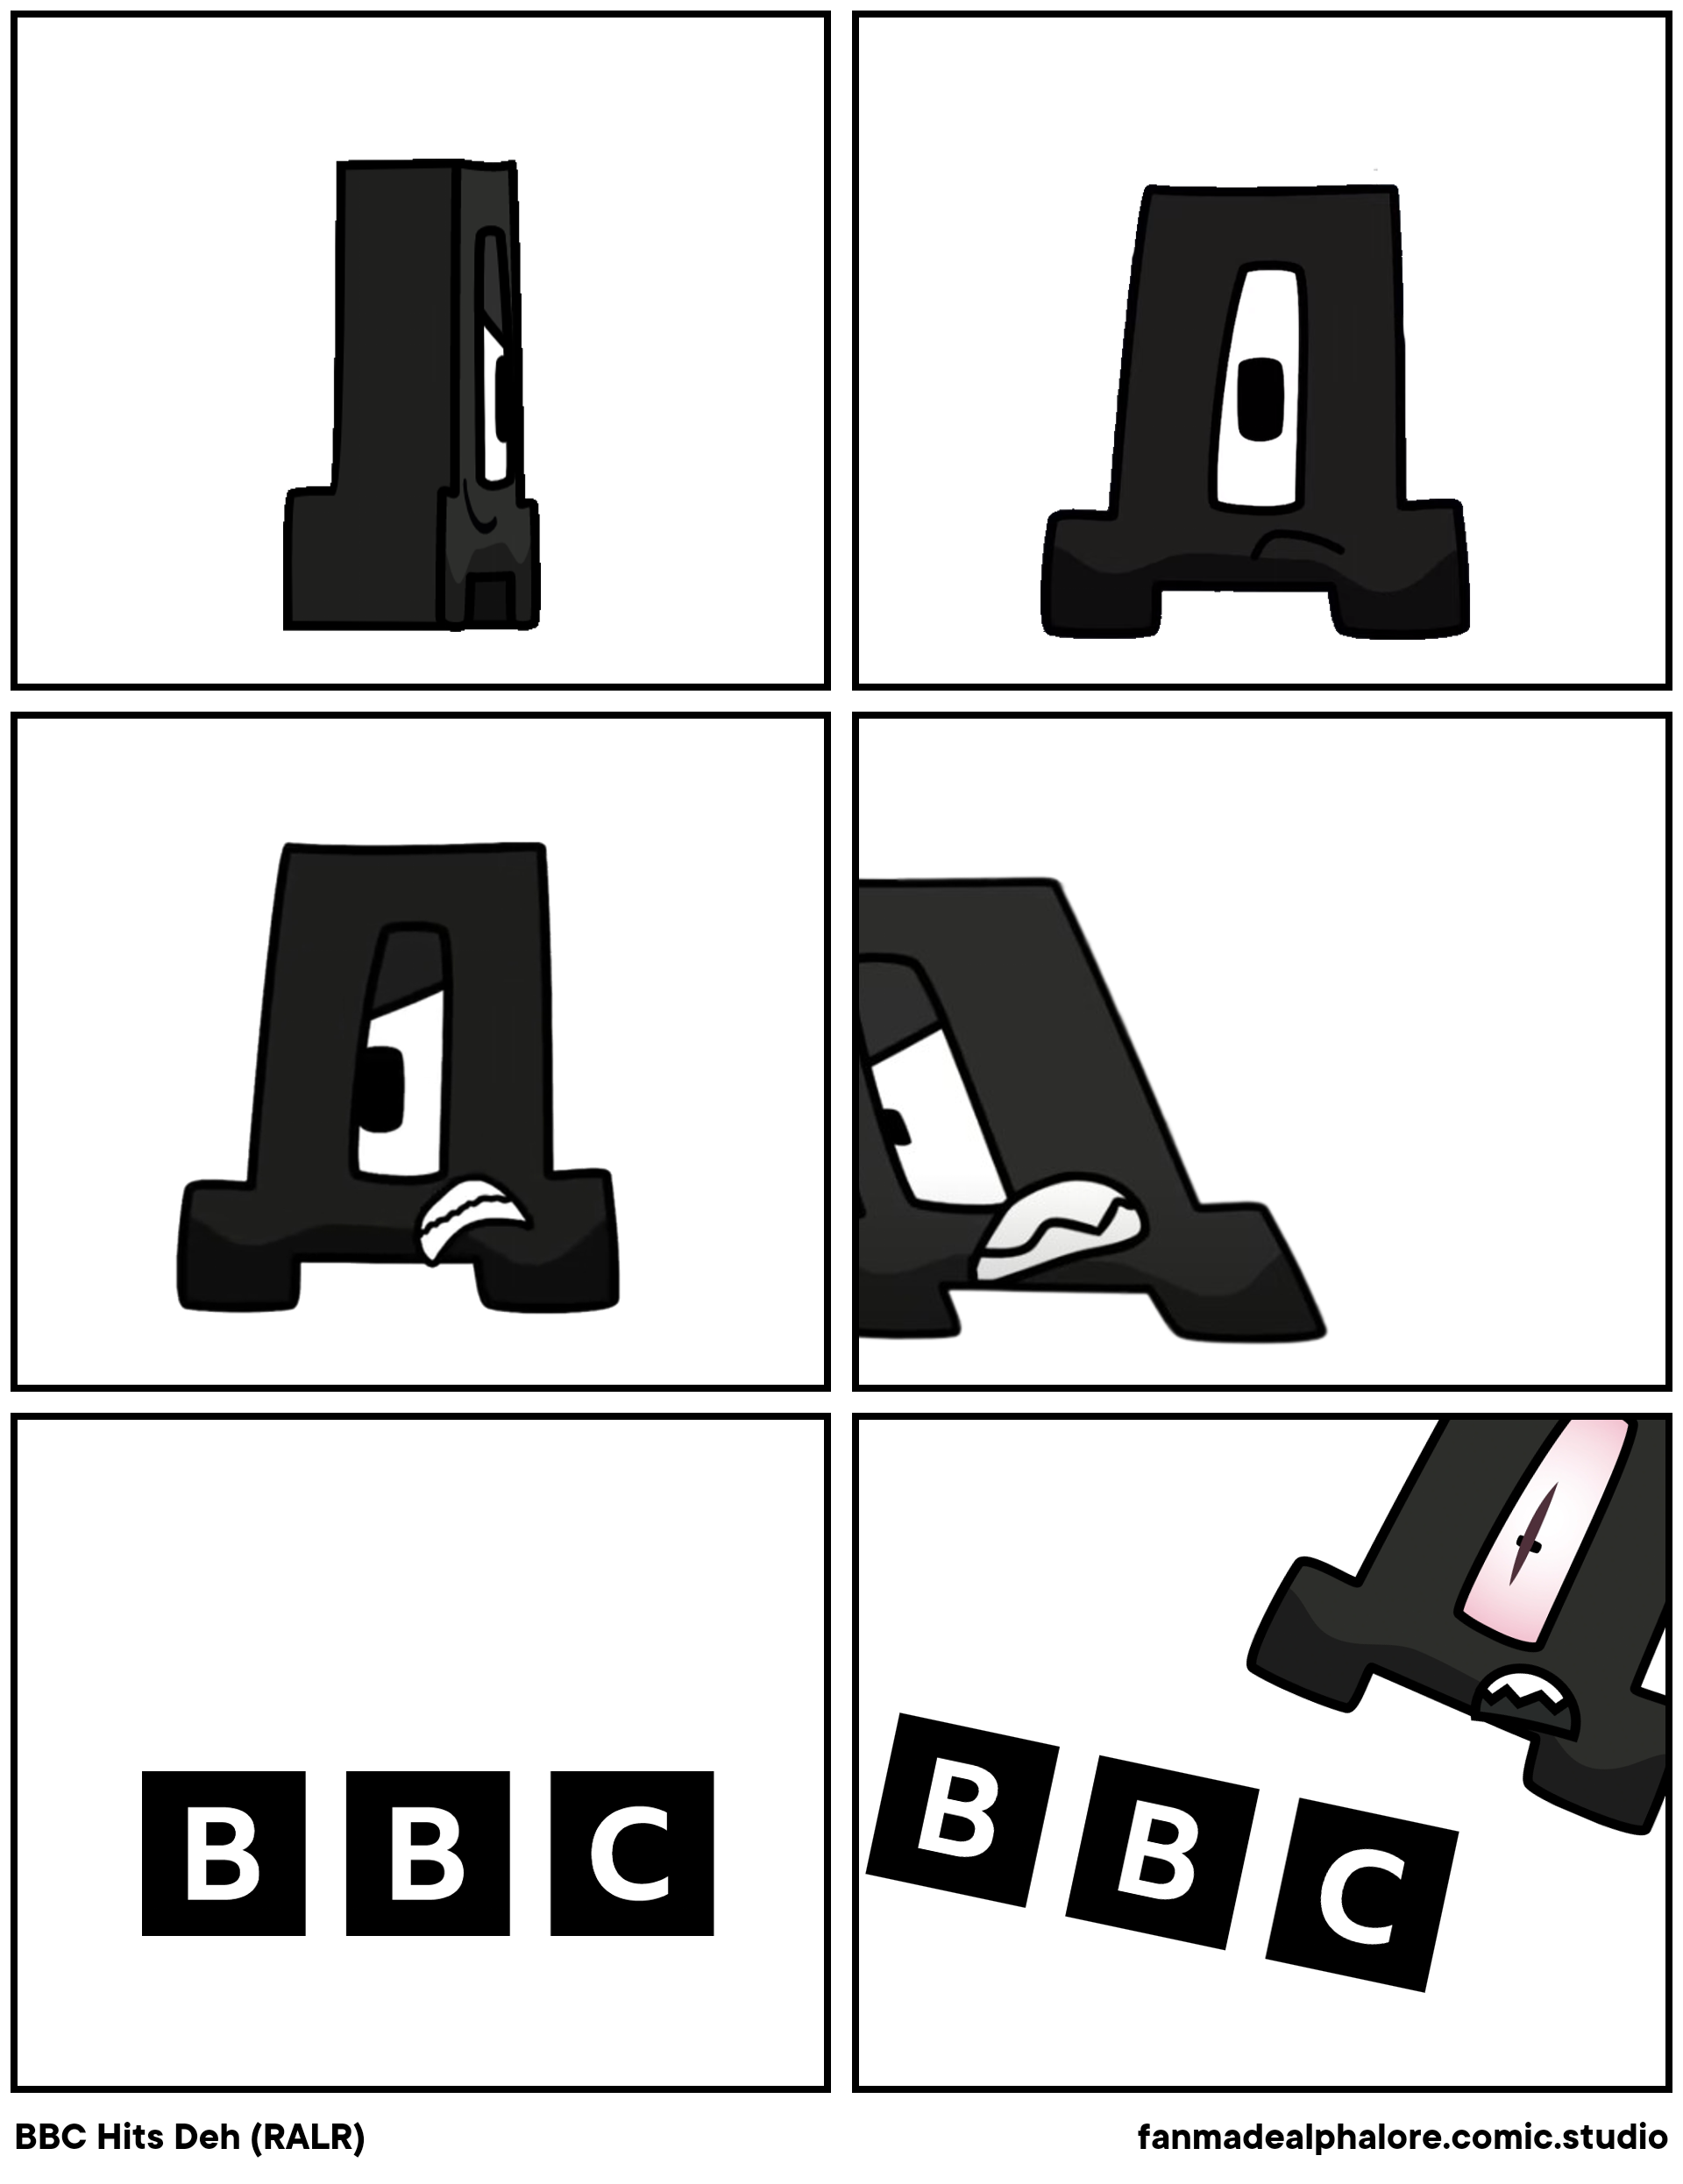 BBC Hits Deh (RALR)